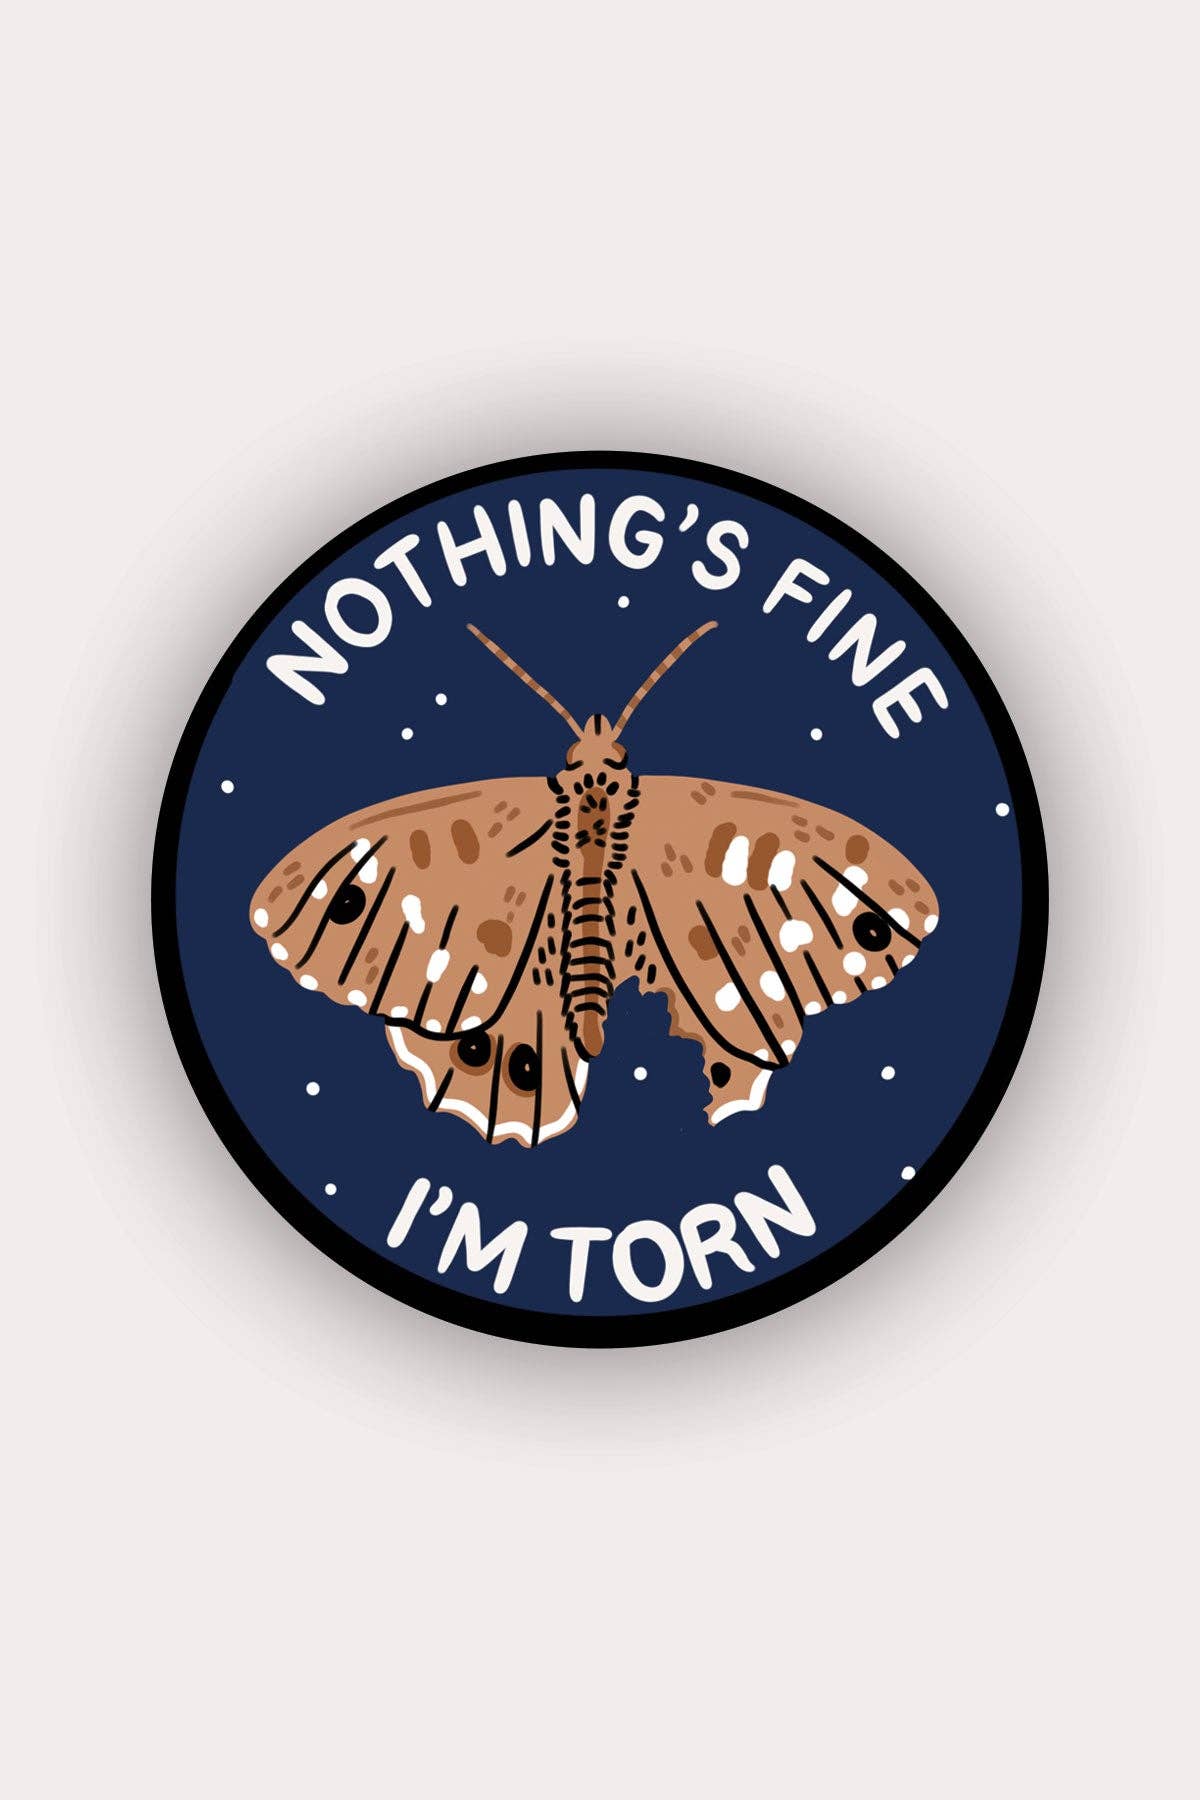 I'm Torn Moth Vinyl Sticker